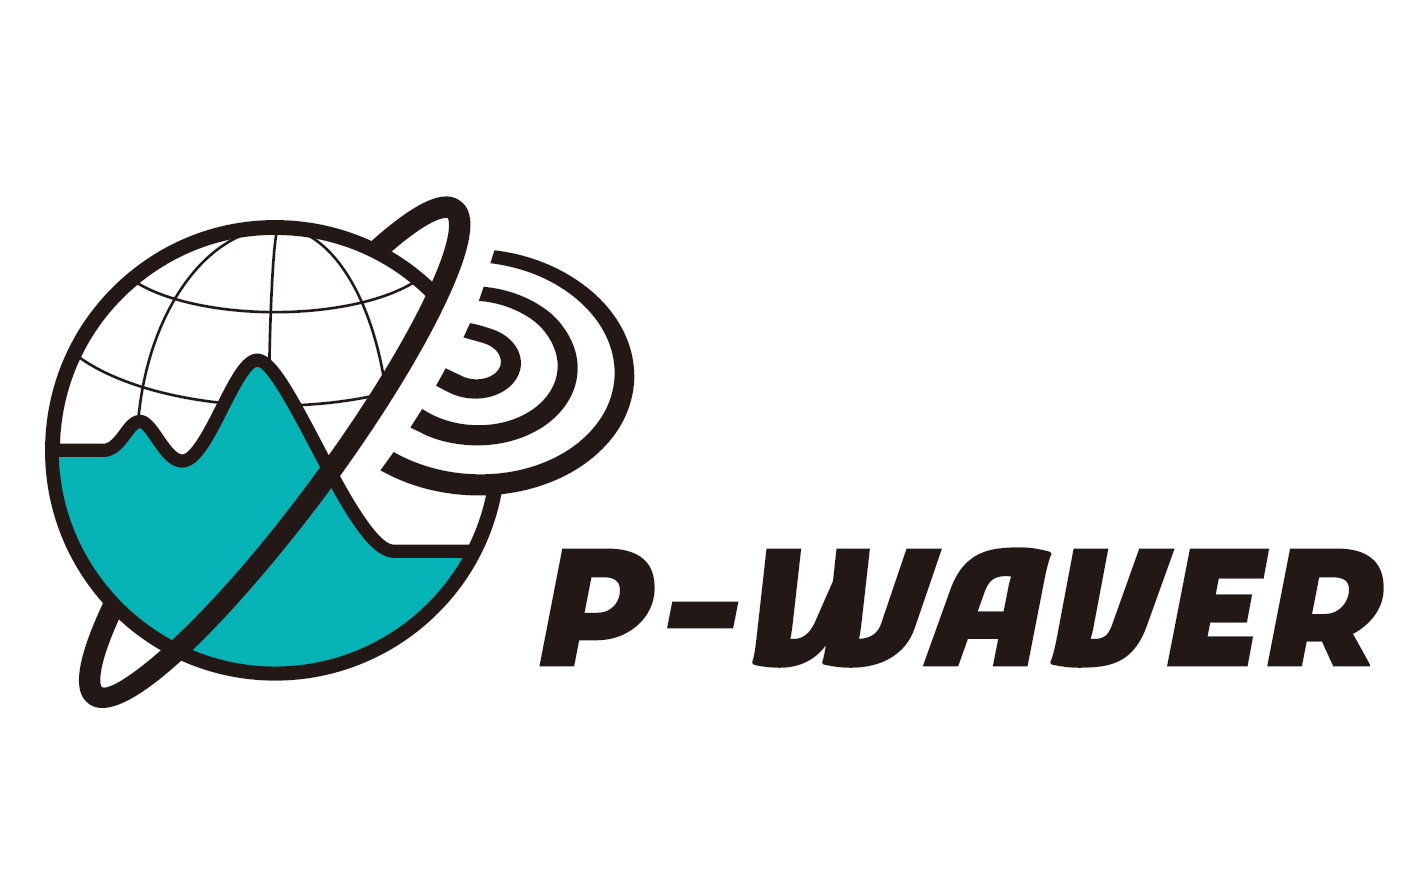 P-Waver